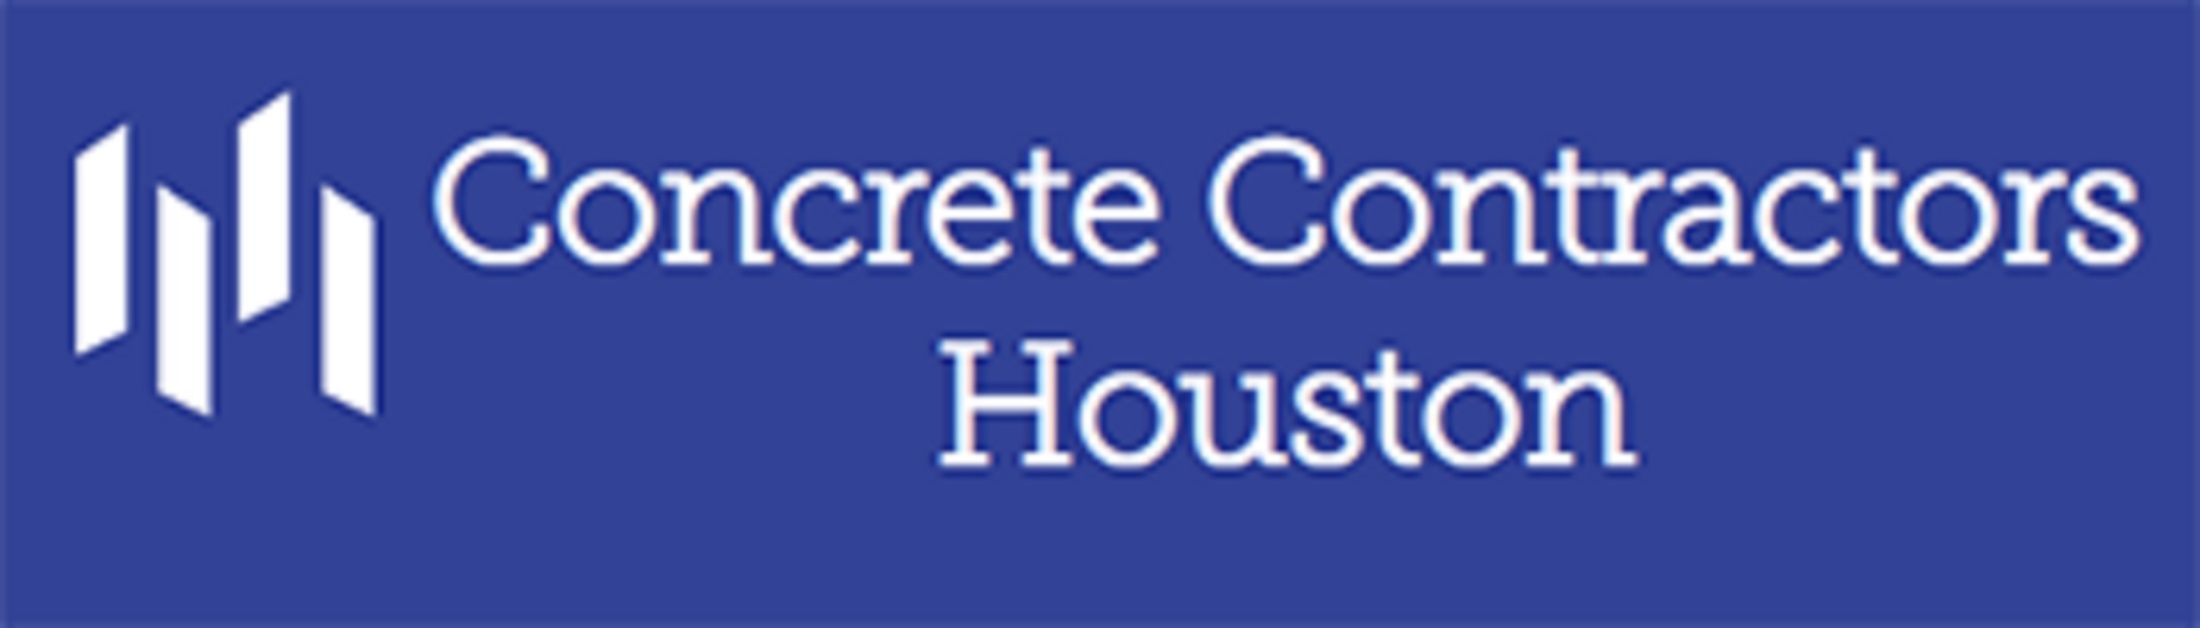 Concrete Contractors Houston's Logo